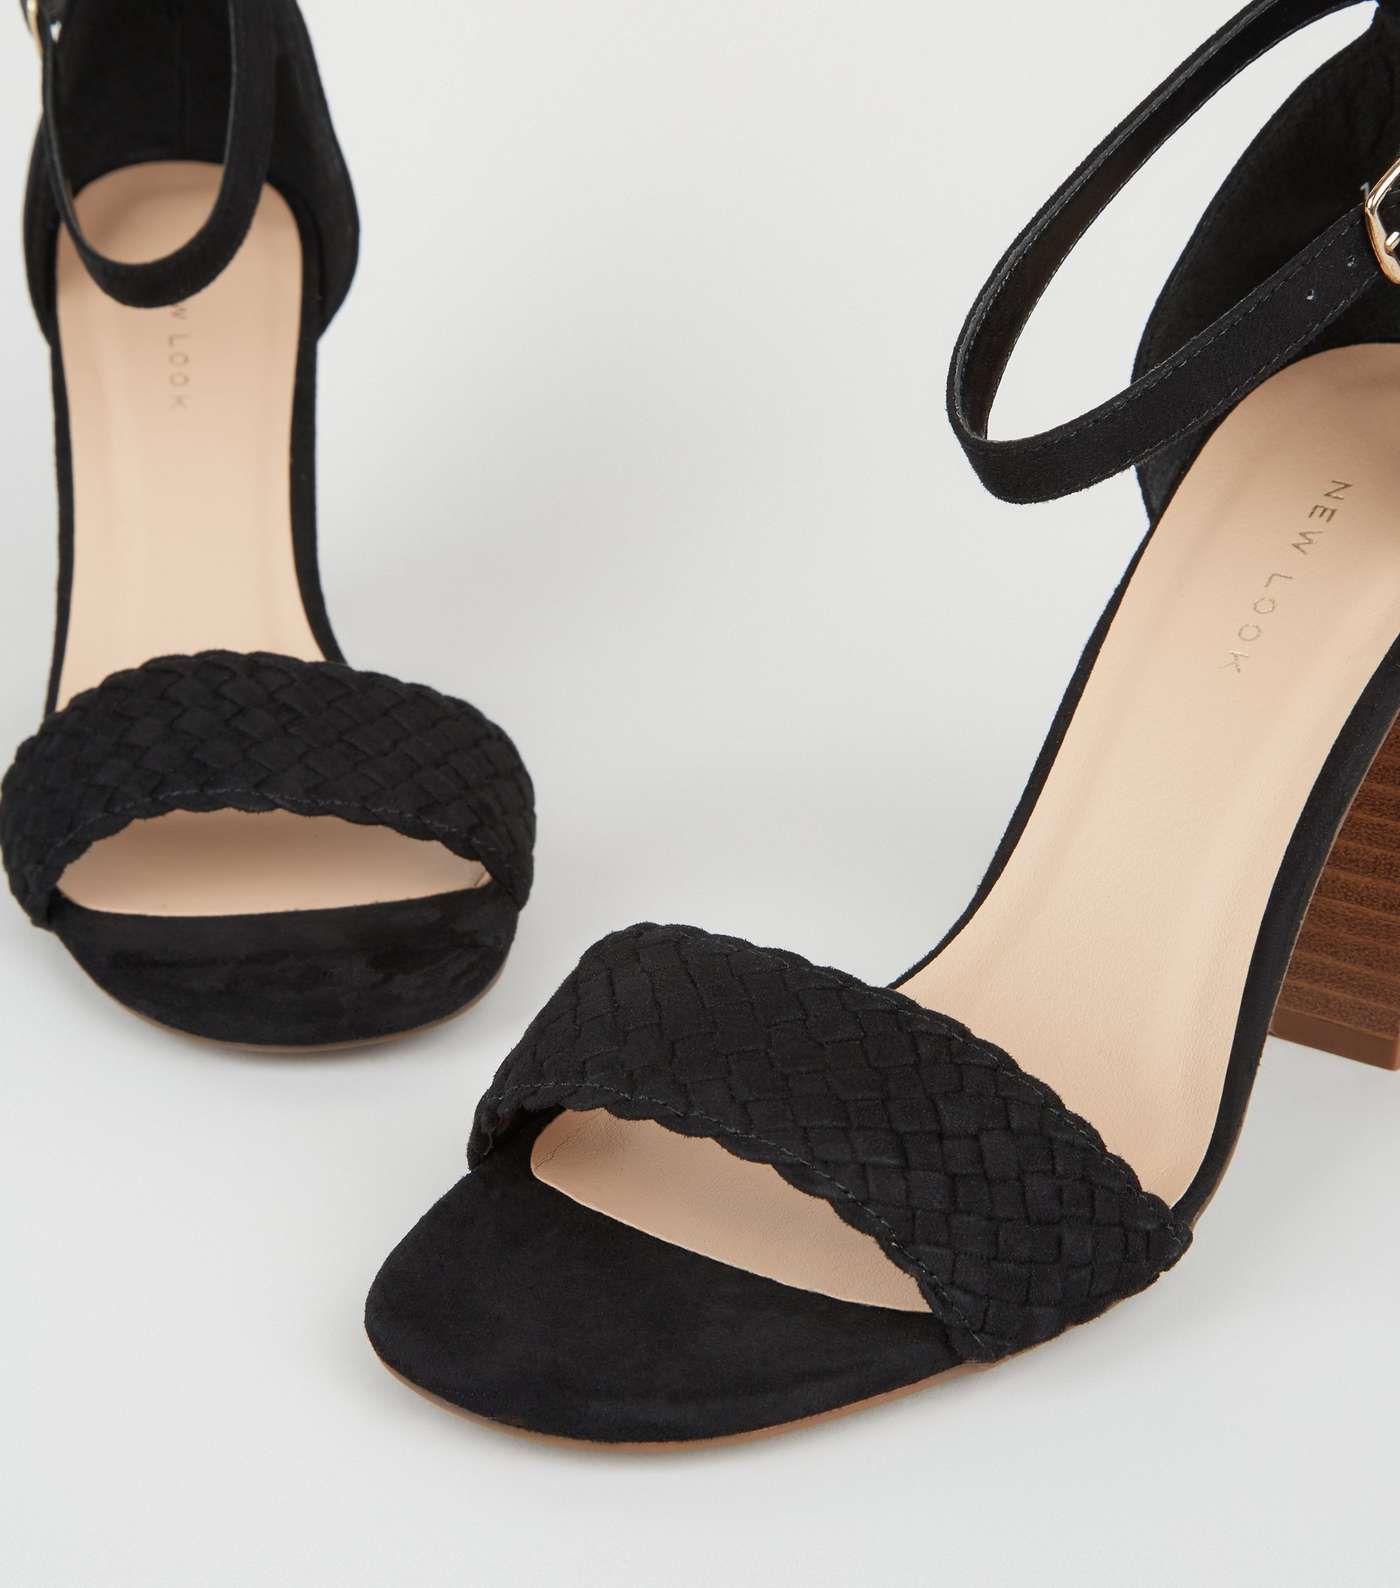 Black Woven Strap Wood Block Heel Sandals Image 3